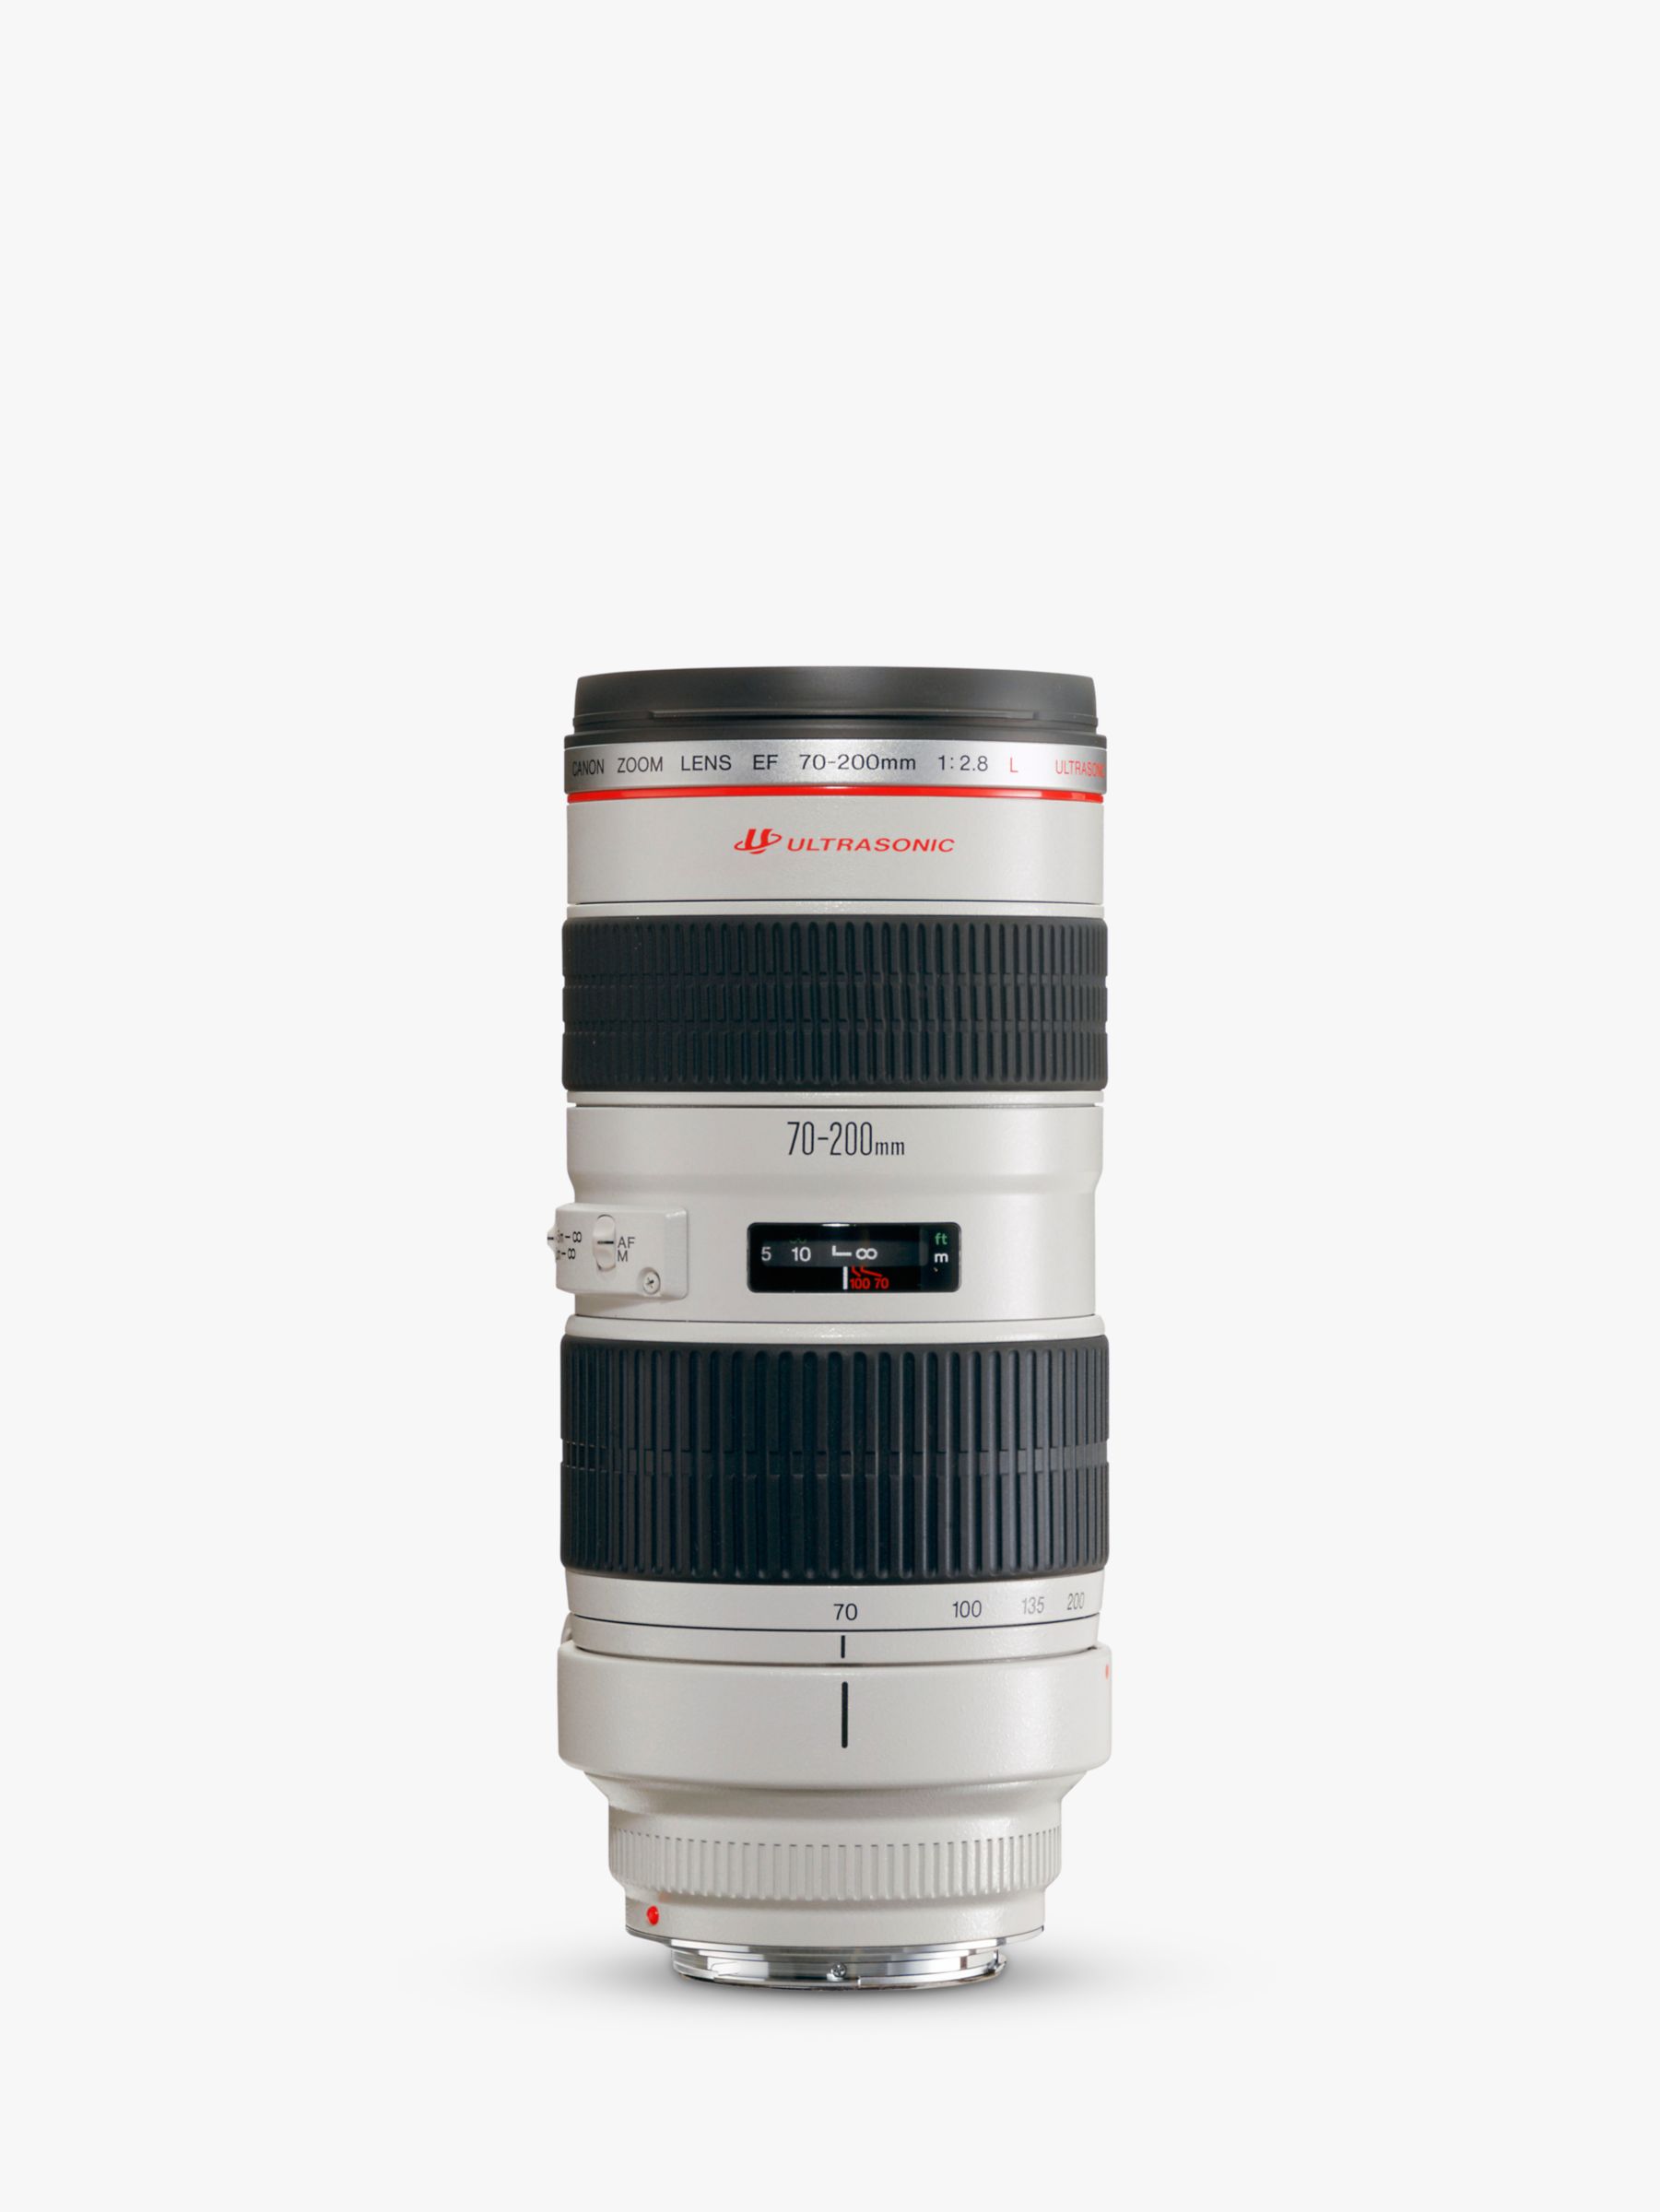 Canon EF 70-200mm f/2.8L USM Telephoto Lens